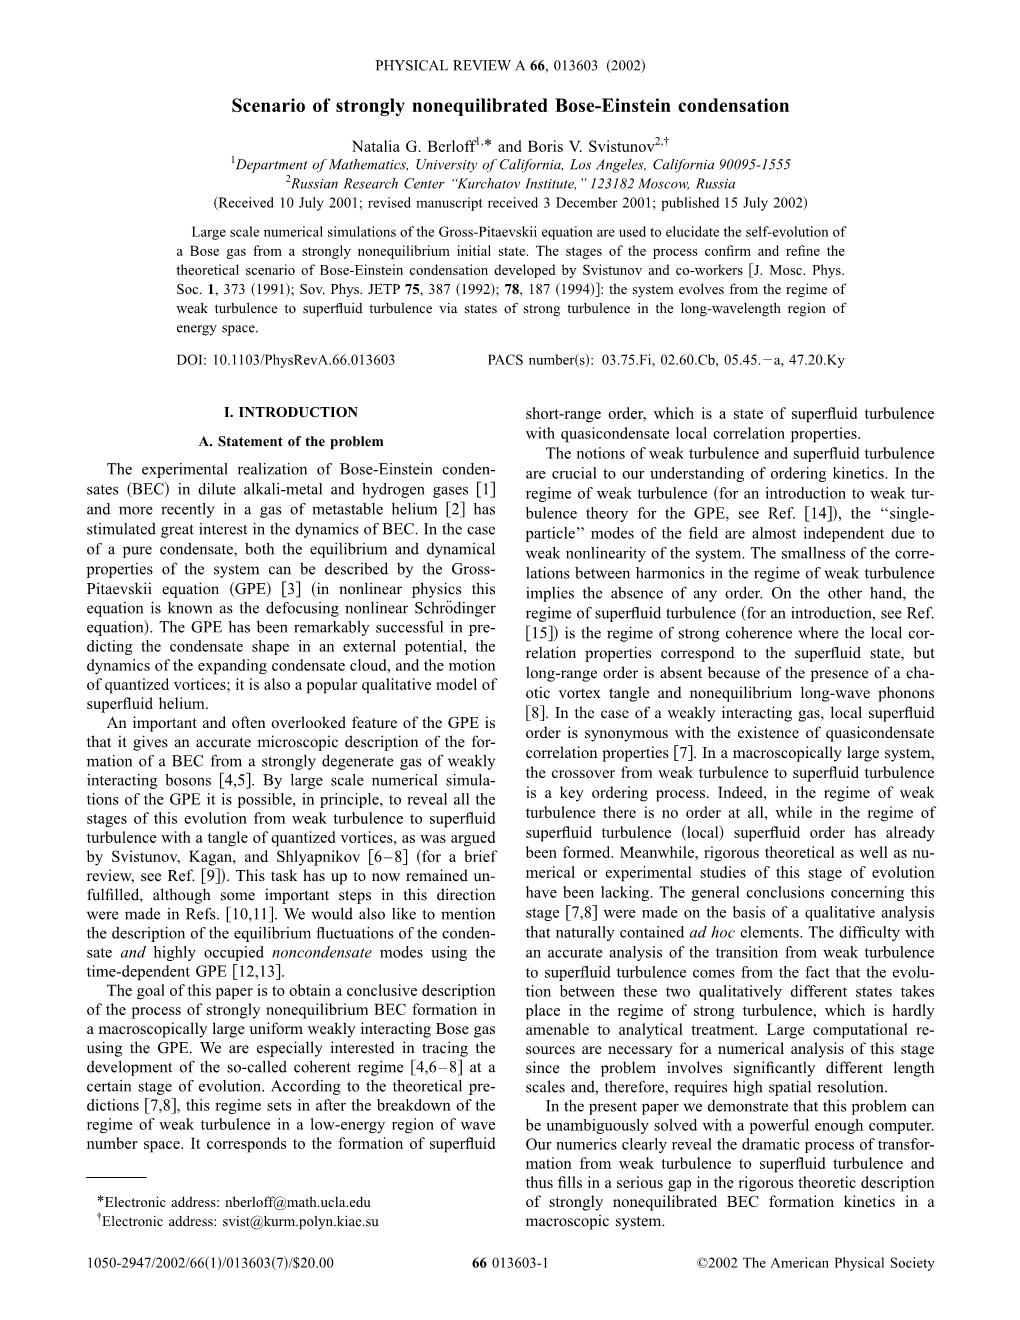 Scenario of Strongly Non-Equilibrated Bose-Einstein Condensation